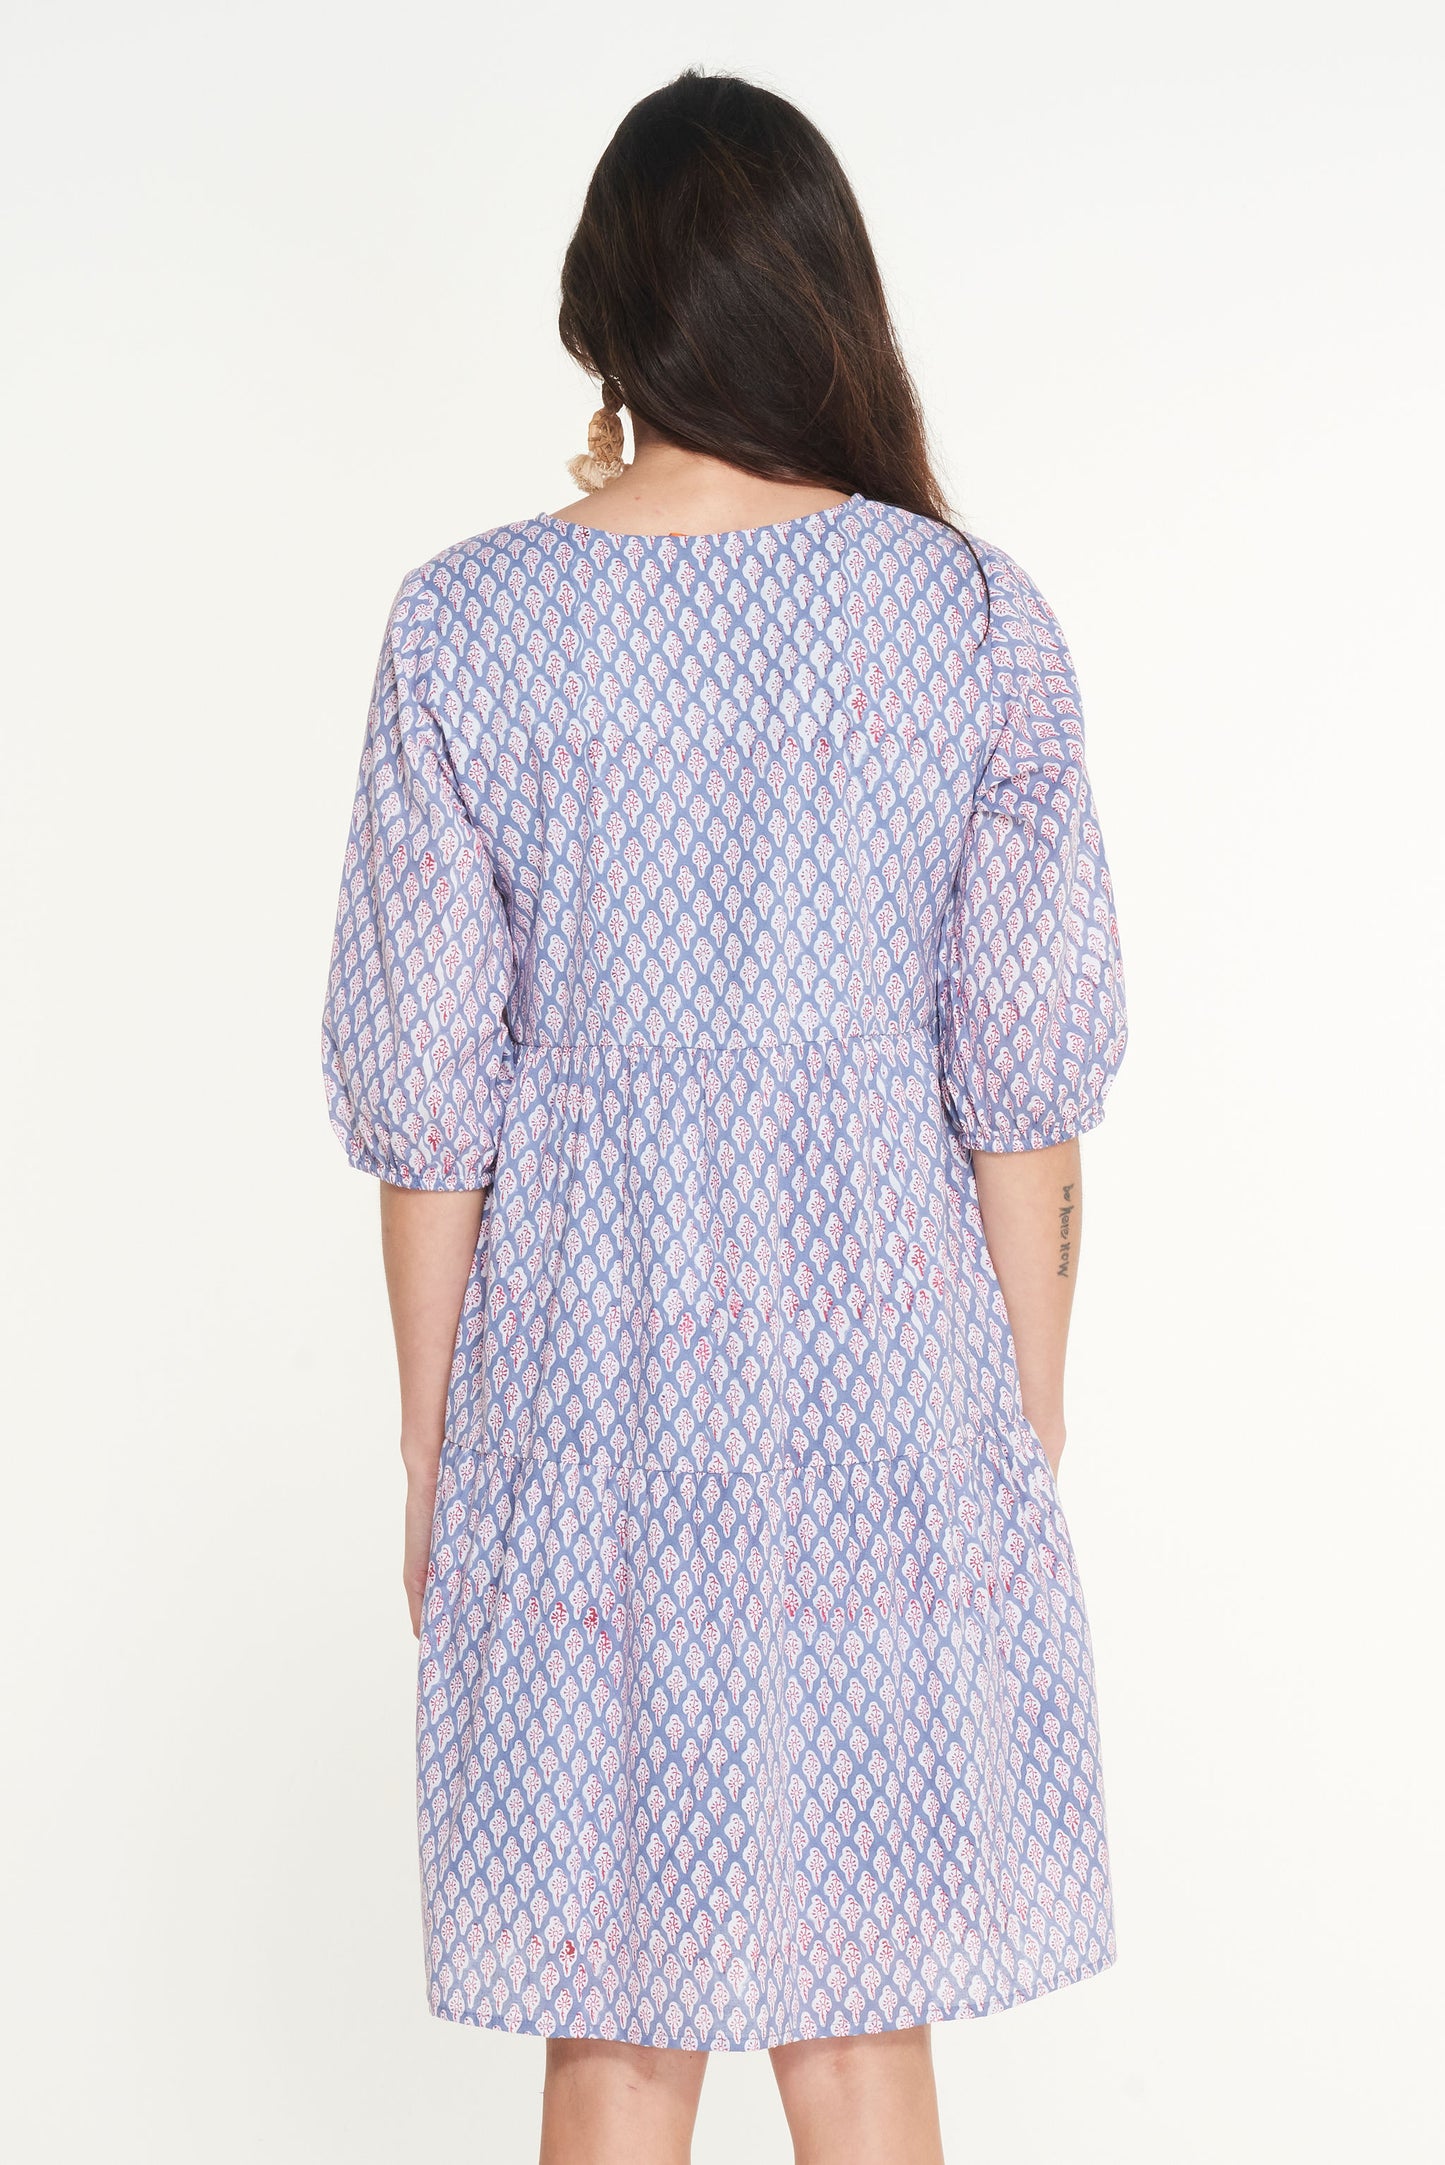 Dress Keshini - Paisley Blue